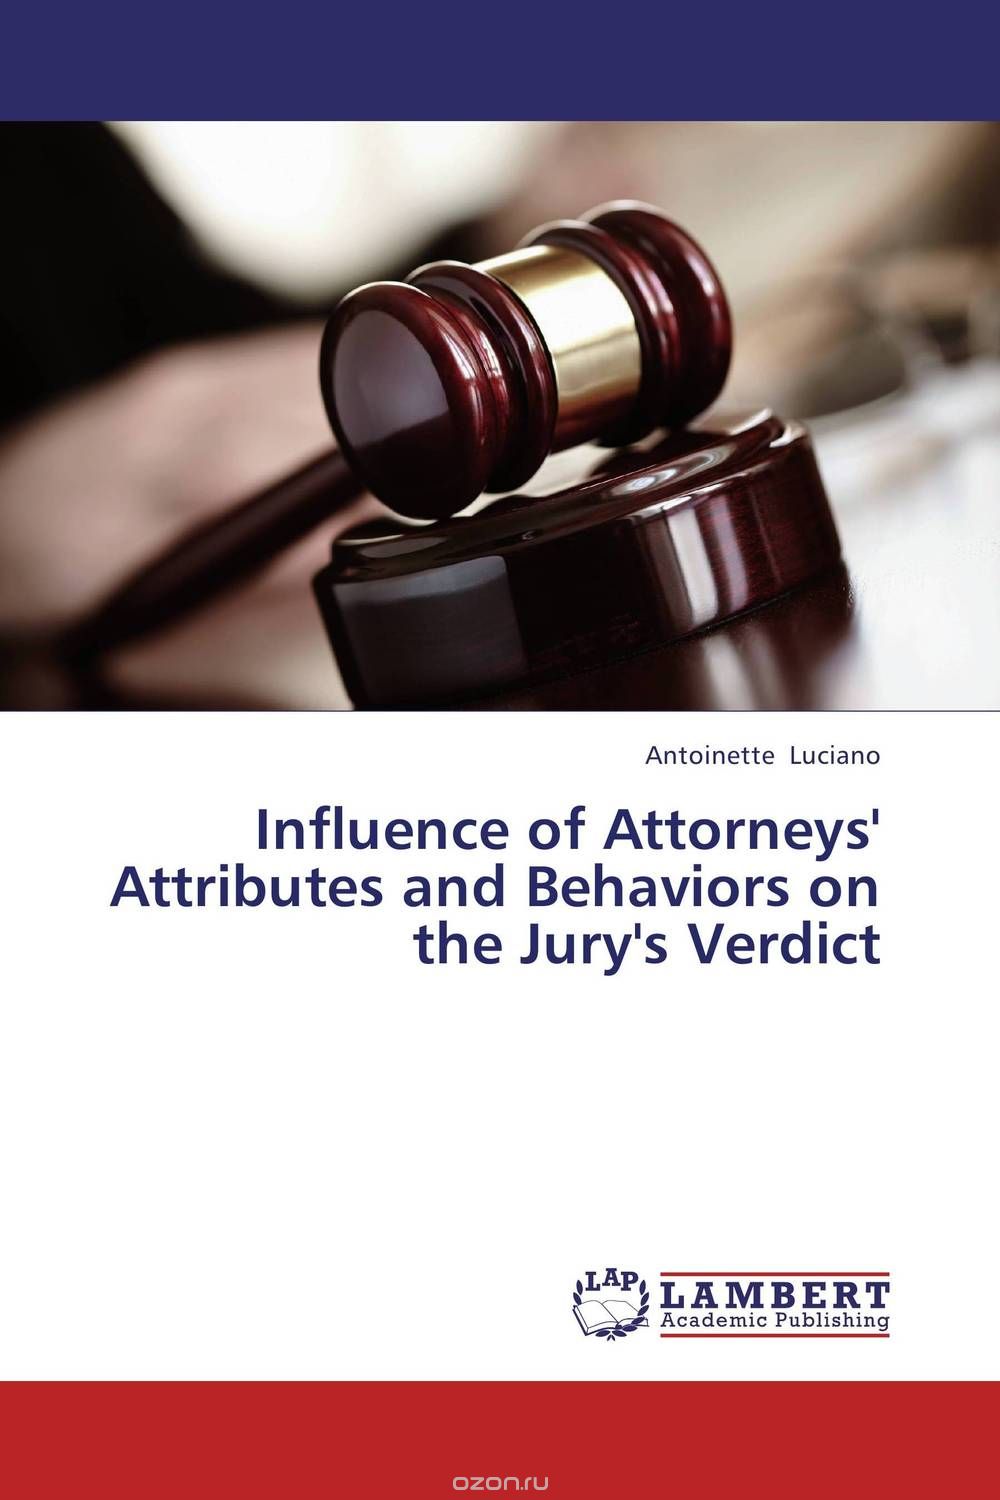 Скачать книгу "Influence of Attorneys' Attributes and Behaviors on the Jury's Verdict"